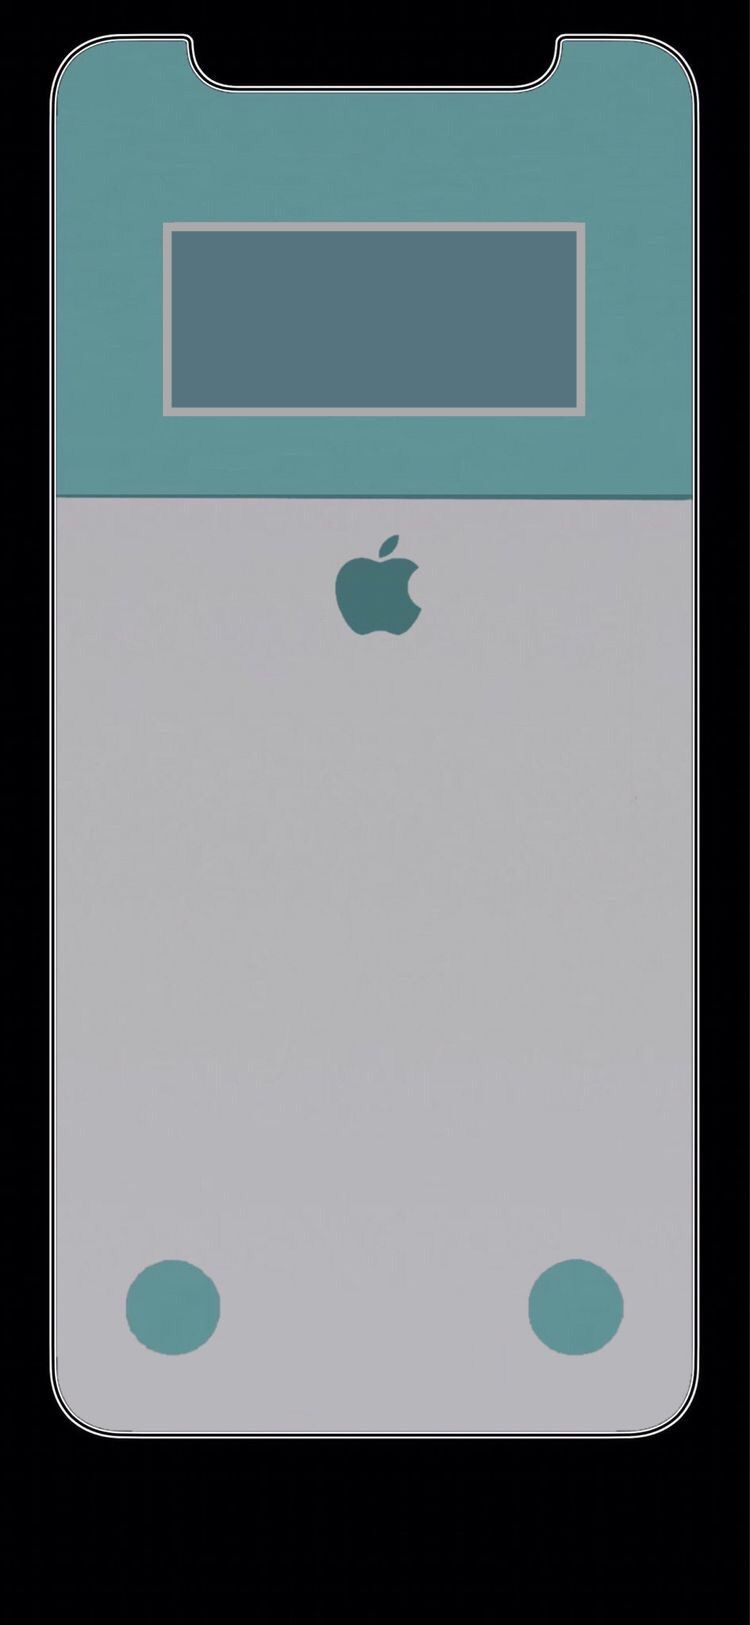 Lock Screen iPhone X. Apple wallpaper iphone, Joker iphone wallpaper, Apple logo wallpaper iphone